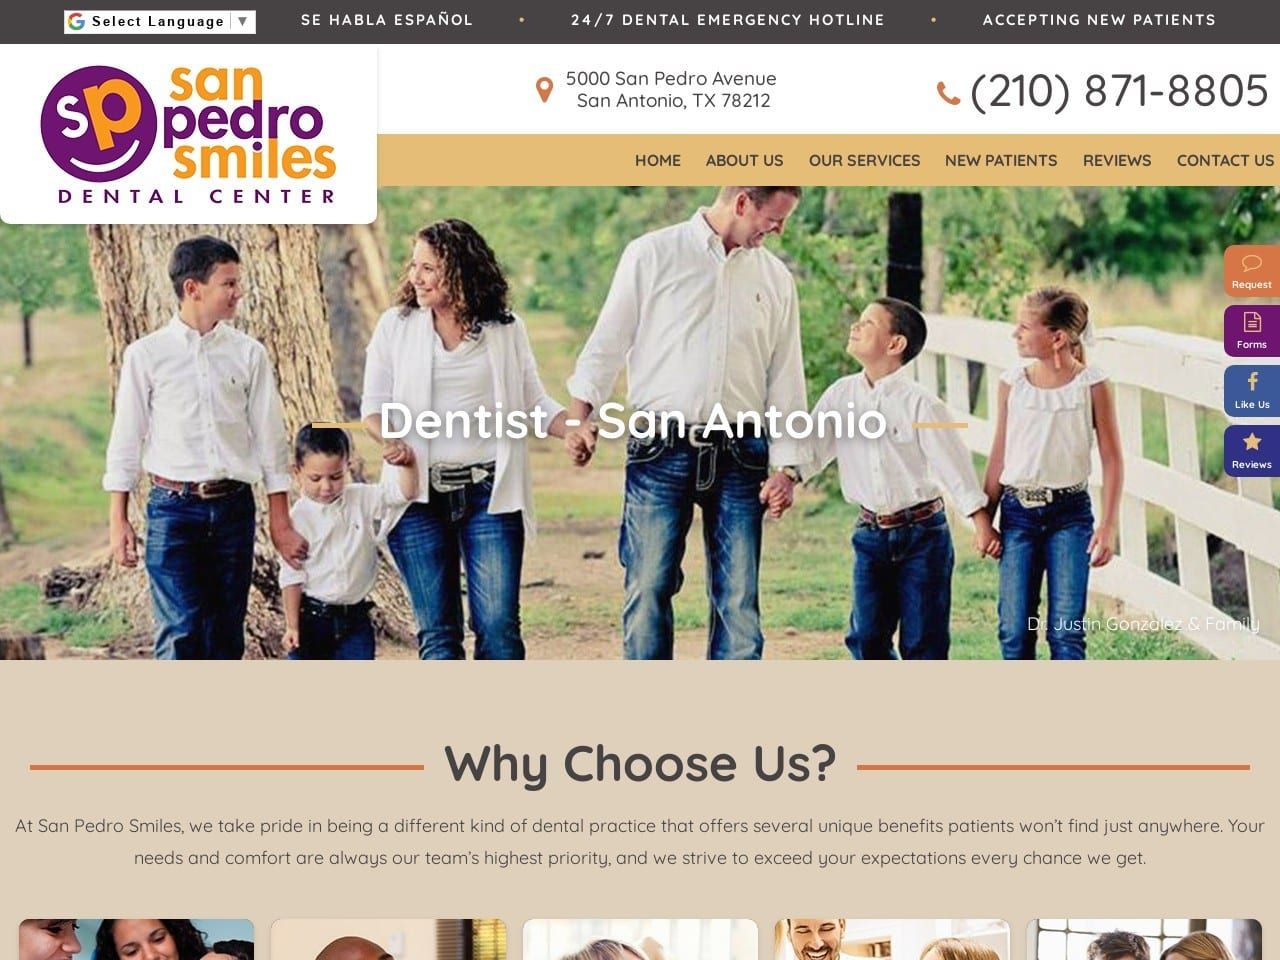 San Pedro Smiles Dental Center Website Screenshot from sanpedrosmiles.com